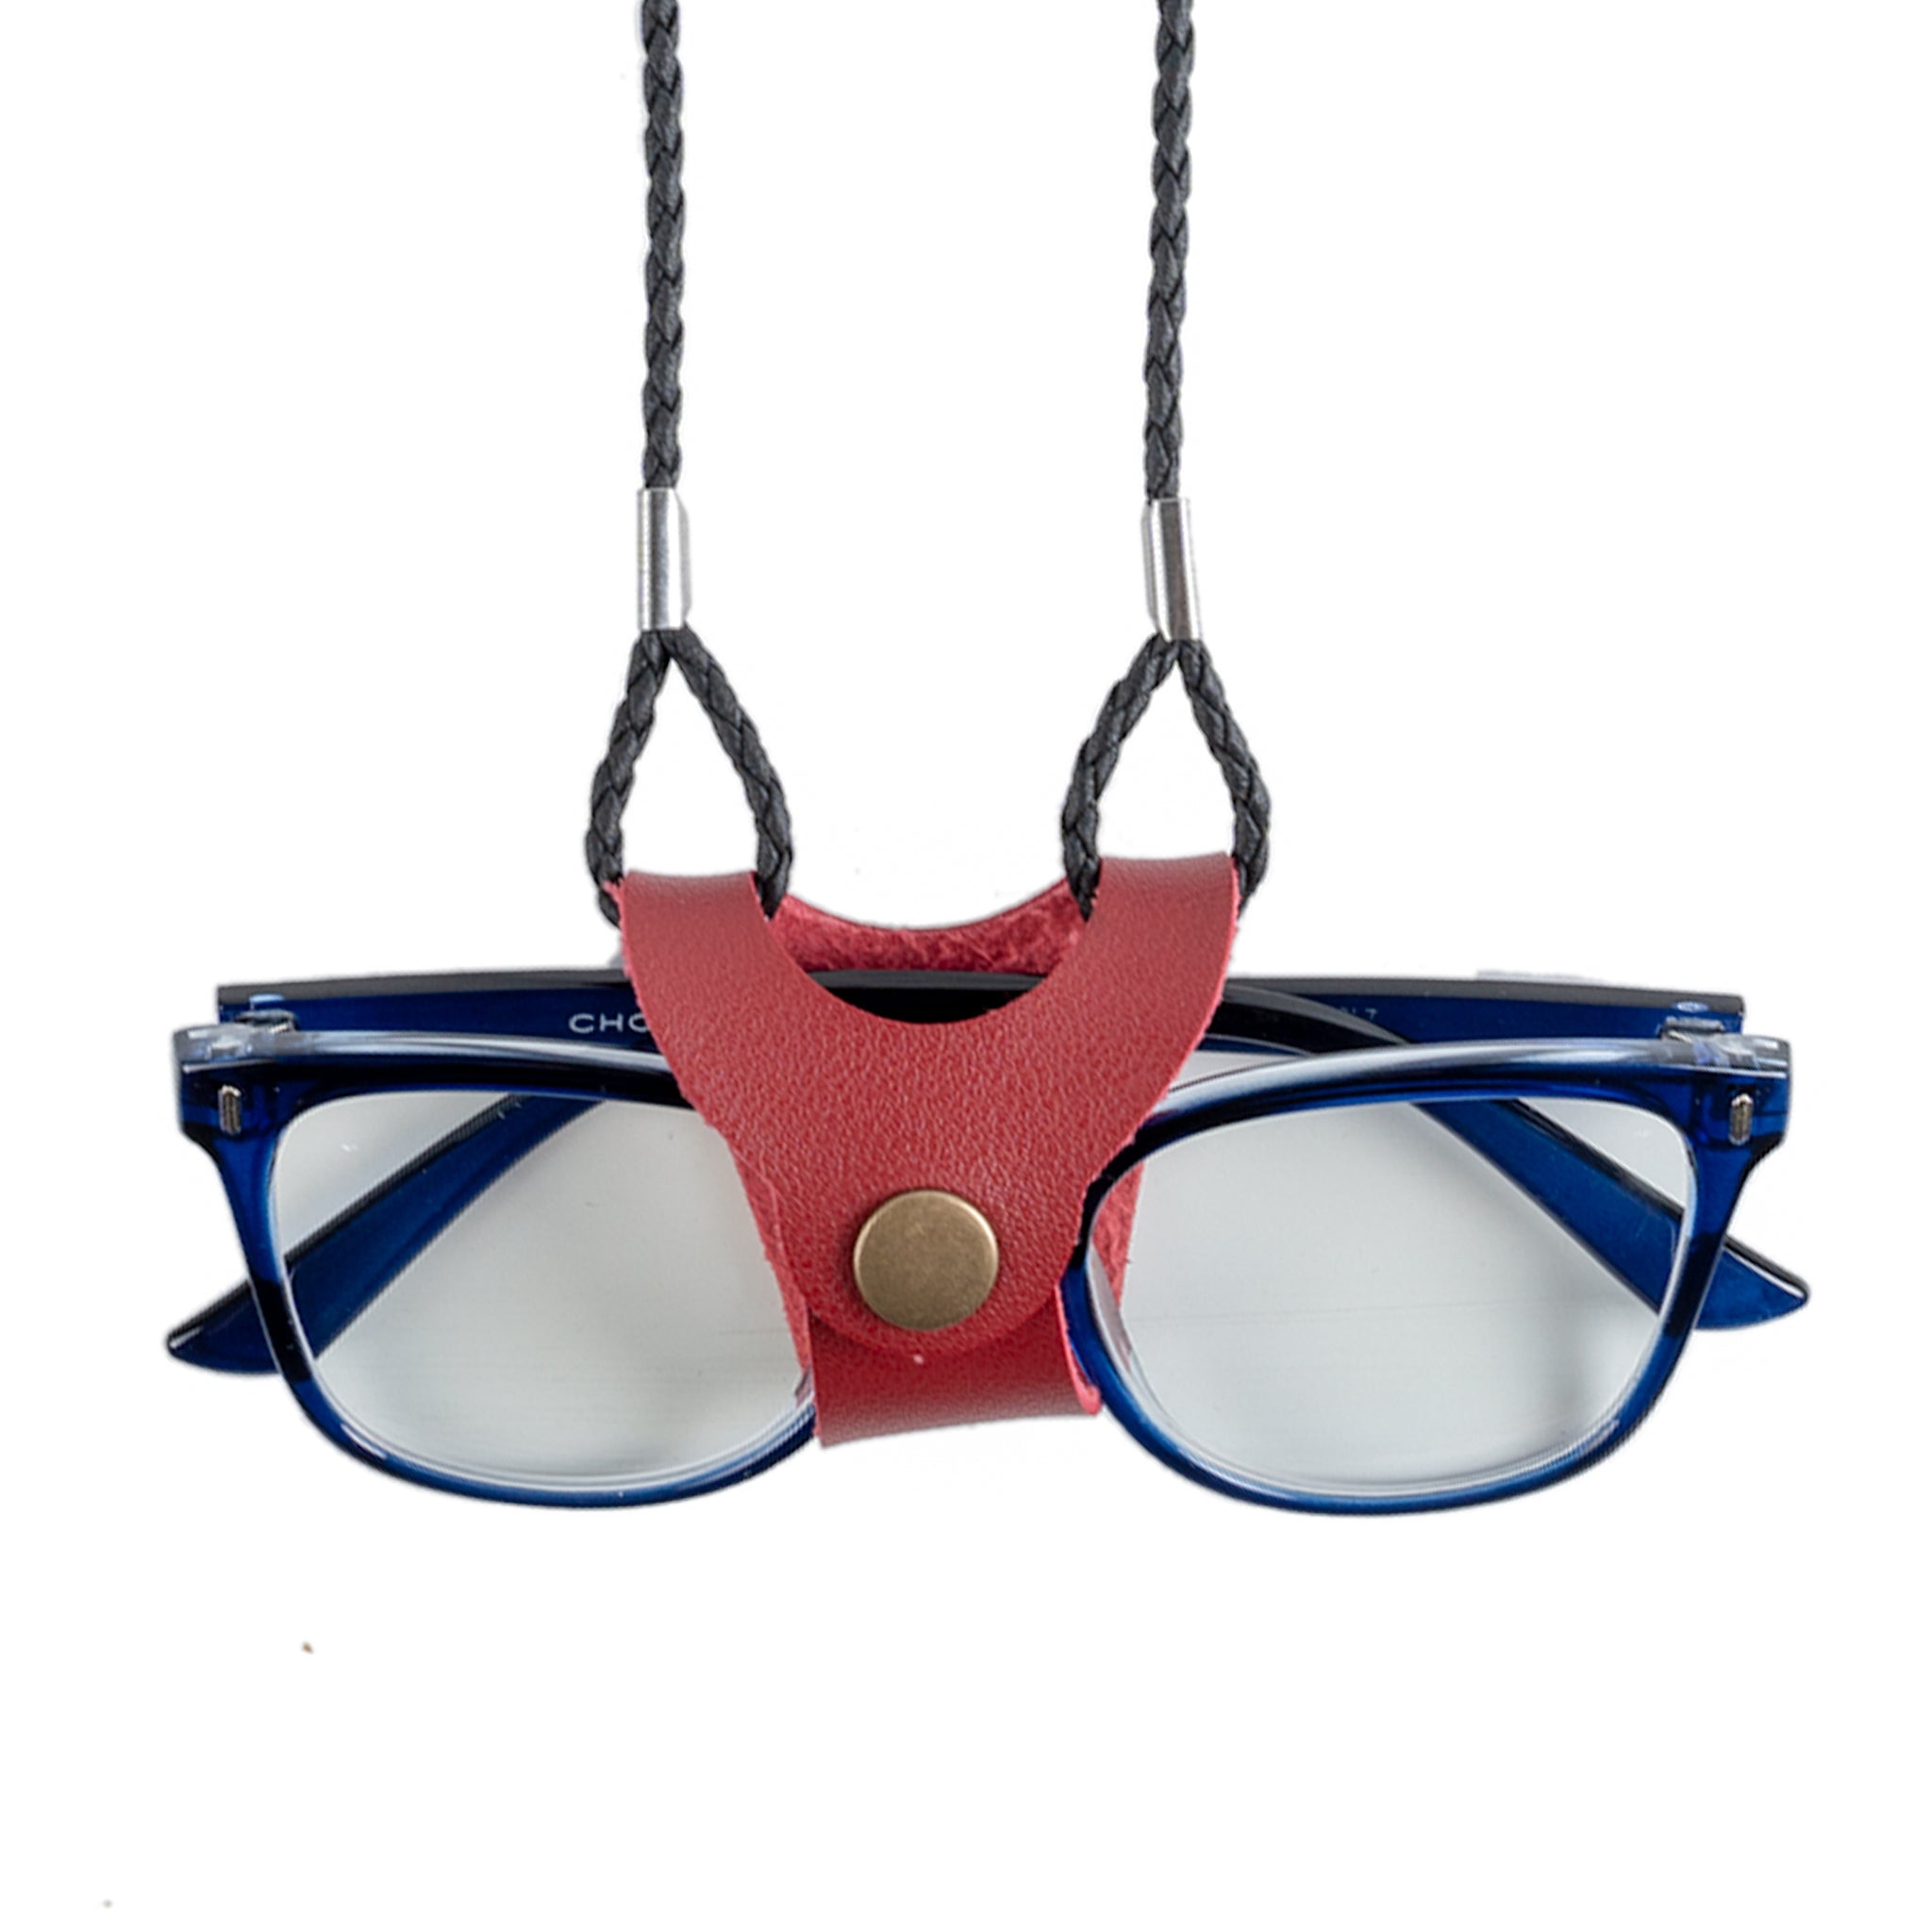 Chokore Leather Braided Eyeglass Cord/String (Red)